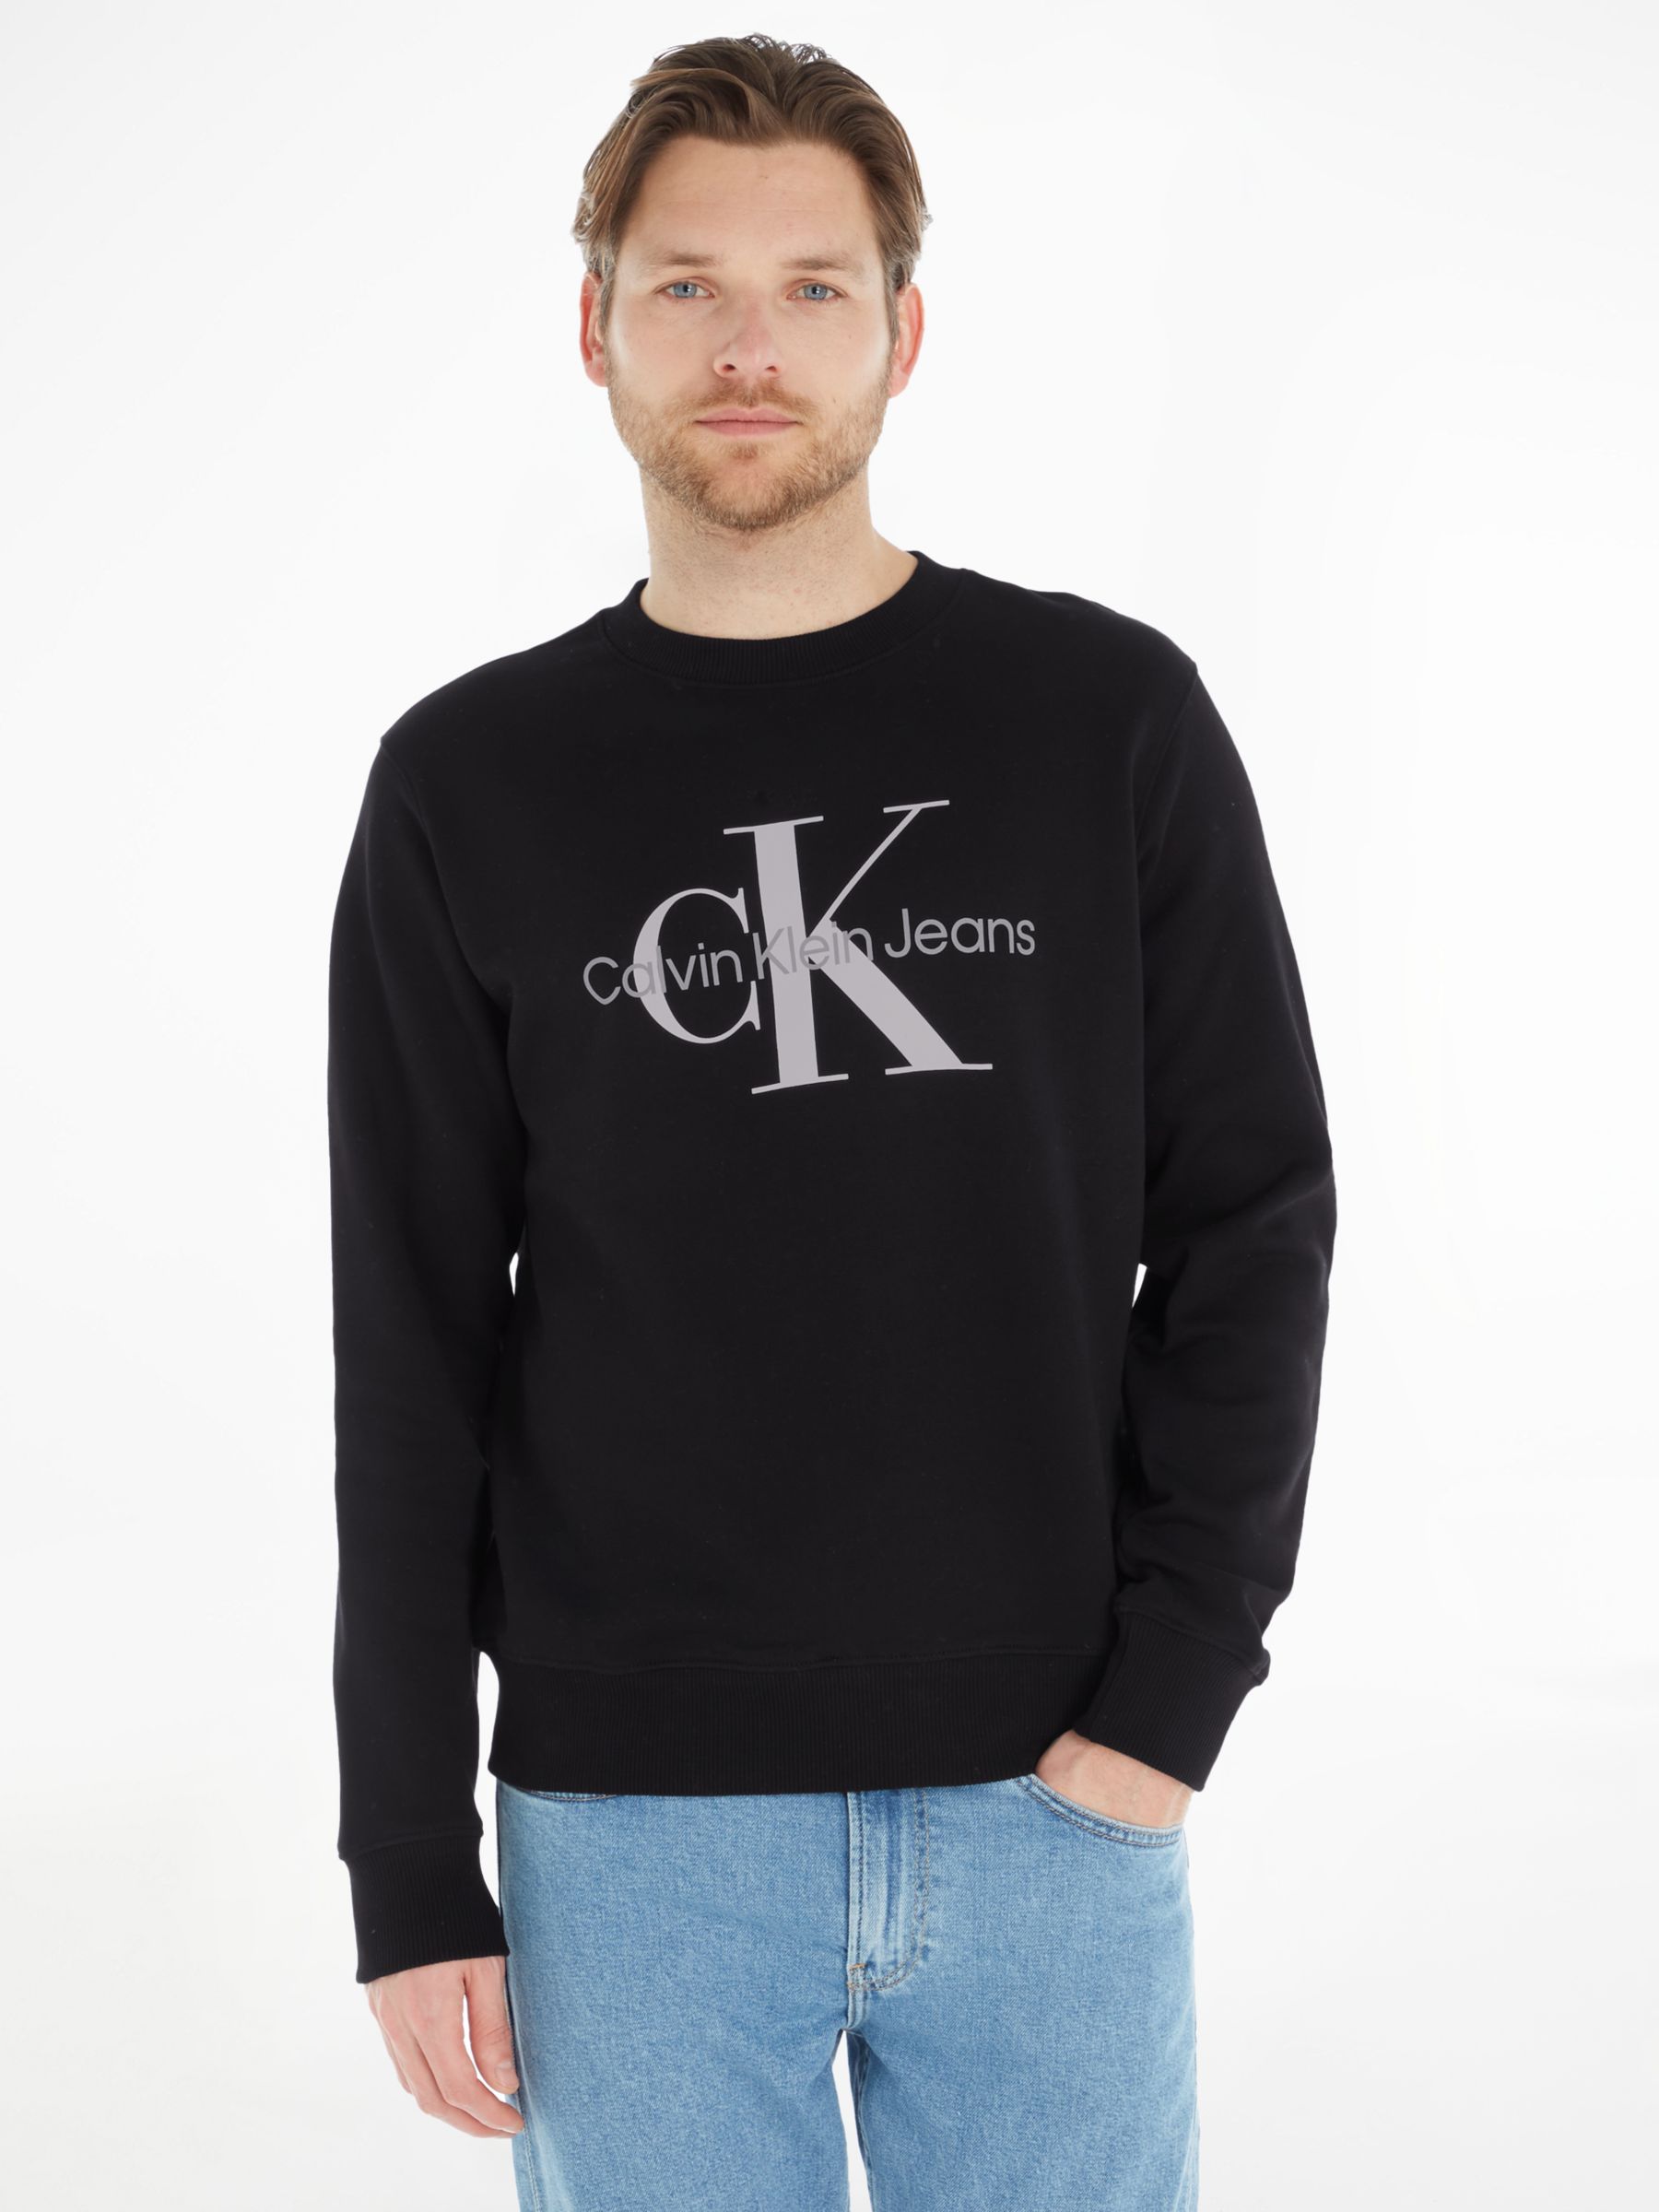 Cotton Monogram Jeans Partners John Lewis Black Calvin at Ck Sweatshirt, Klein Core Logo &